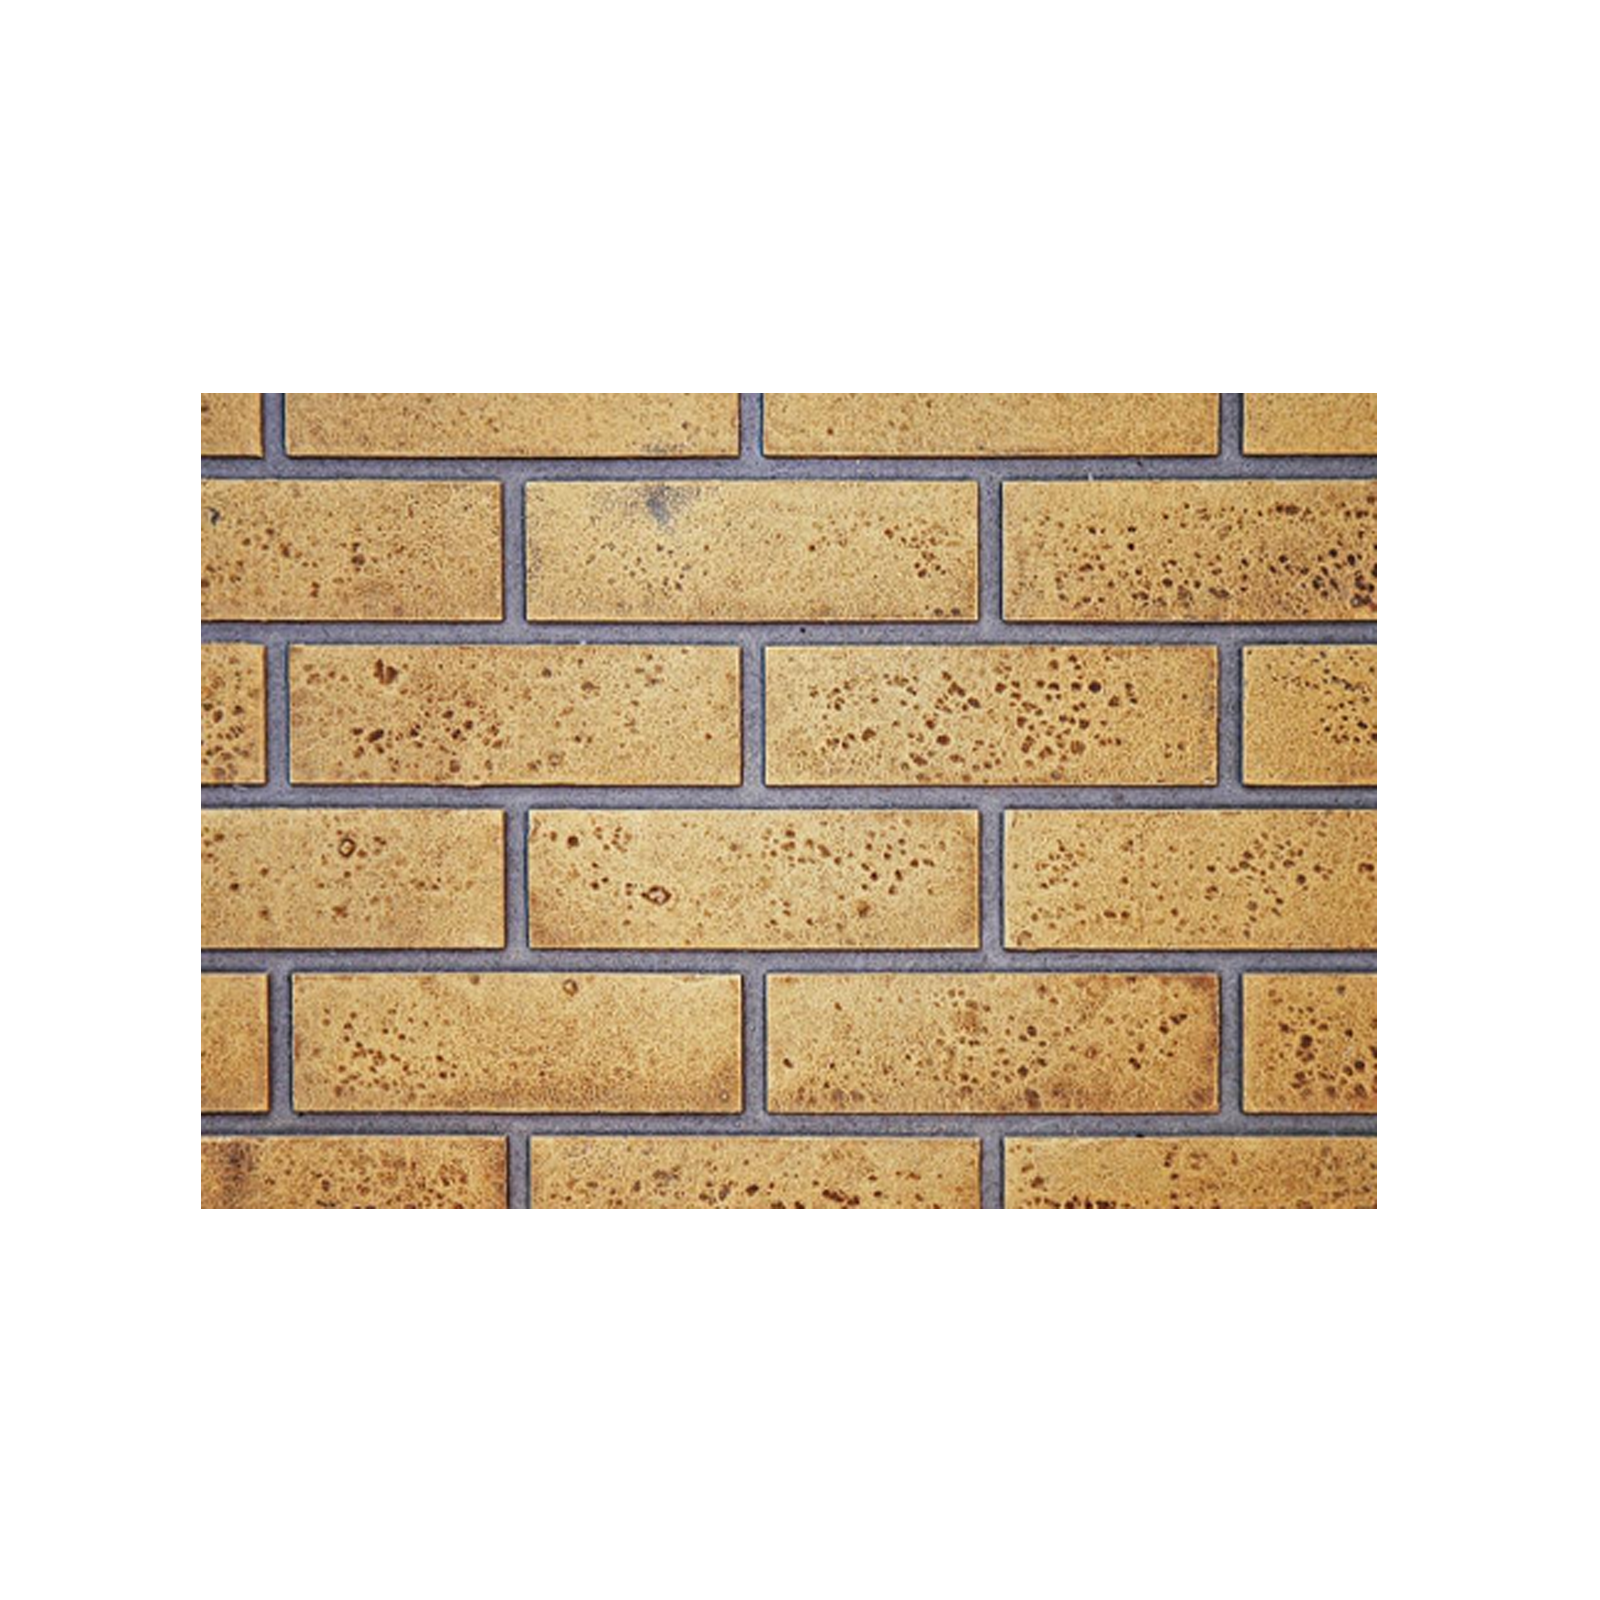 Napoleon Sandstone Decorative Brick Panels - GD843KT